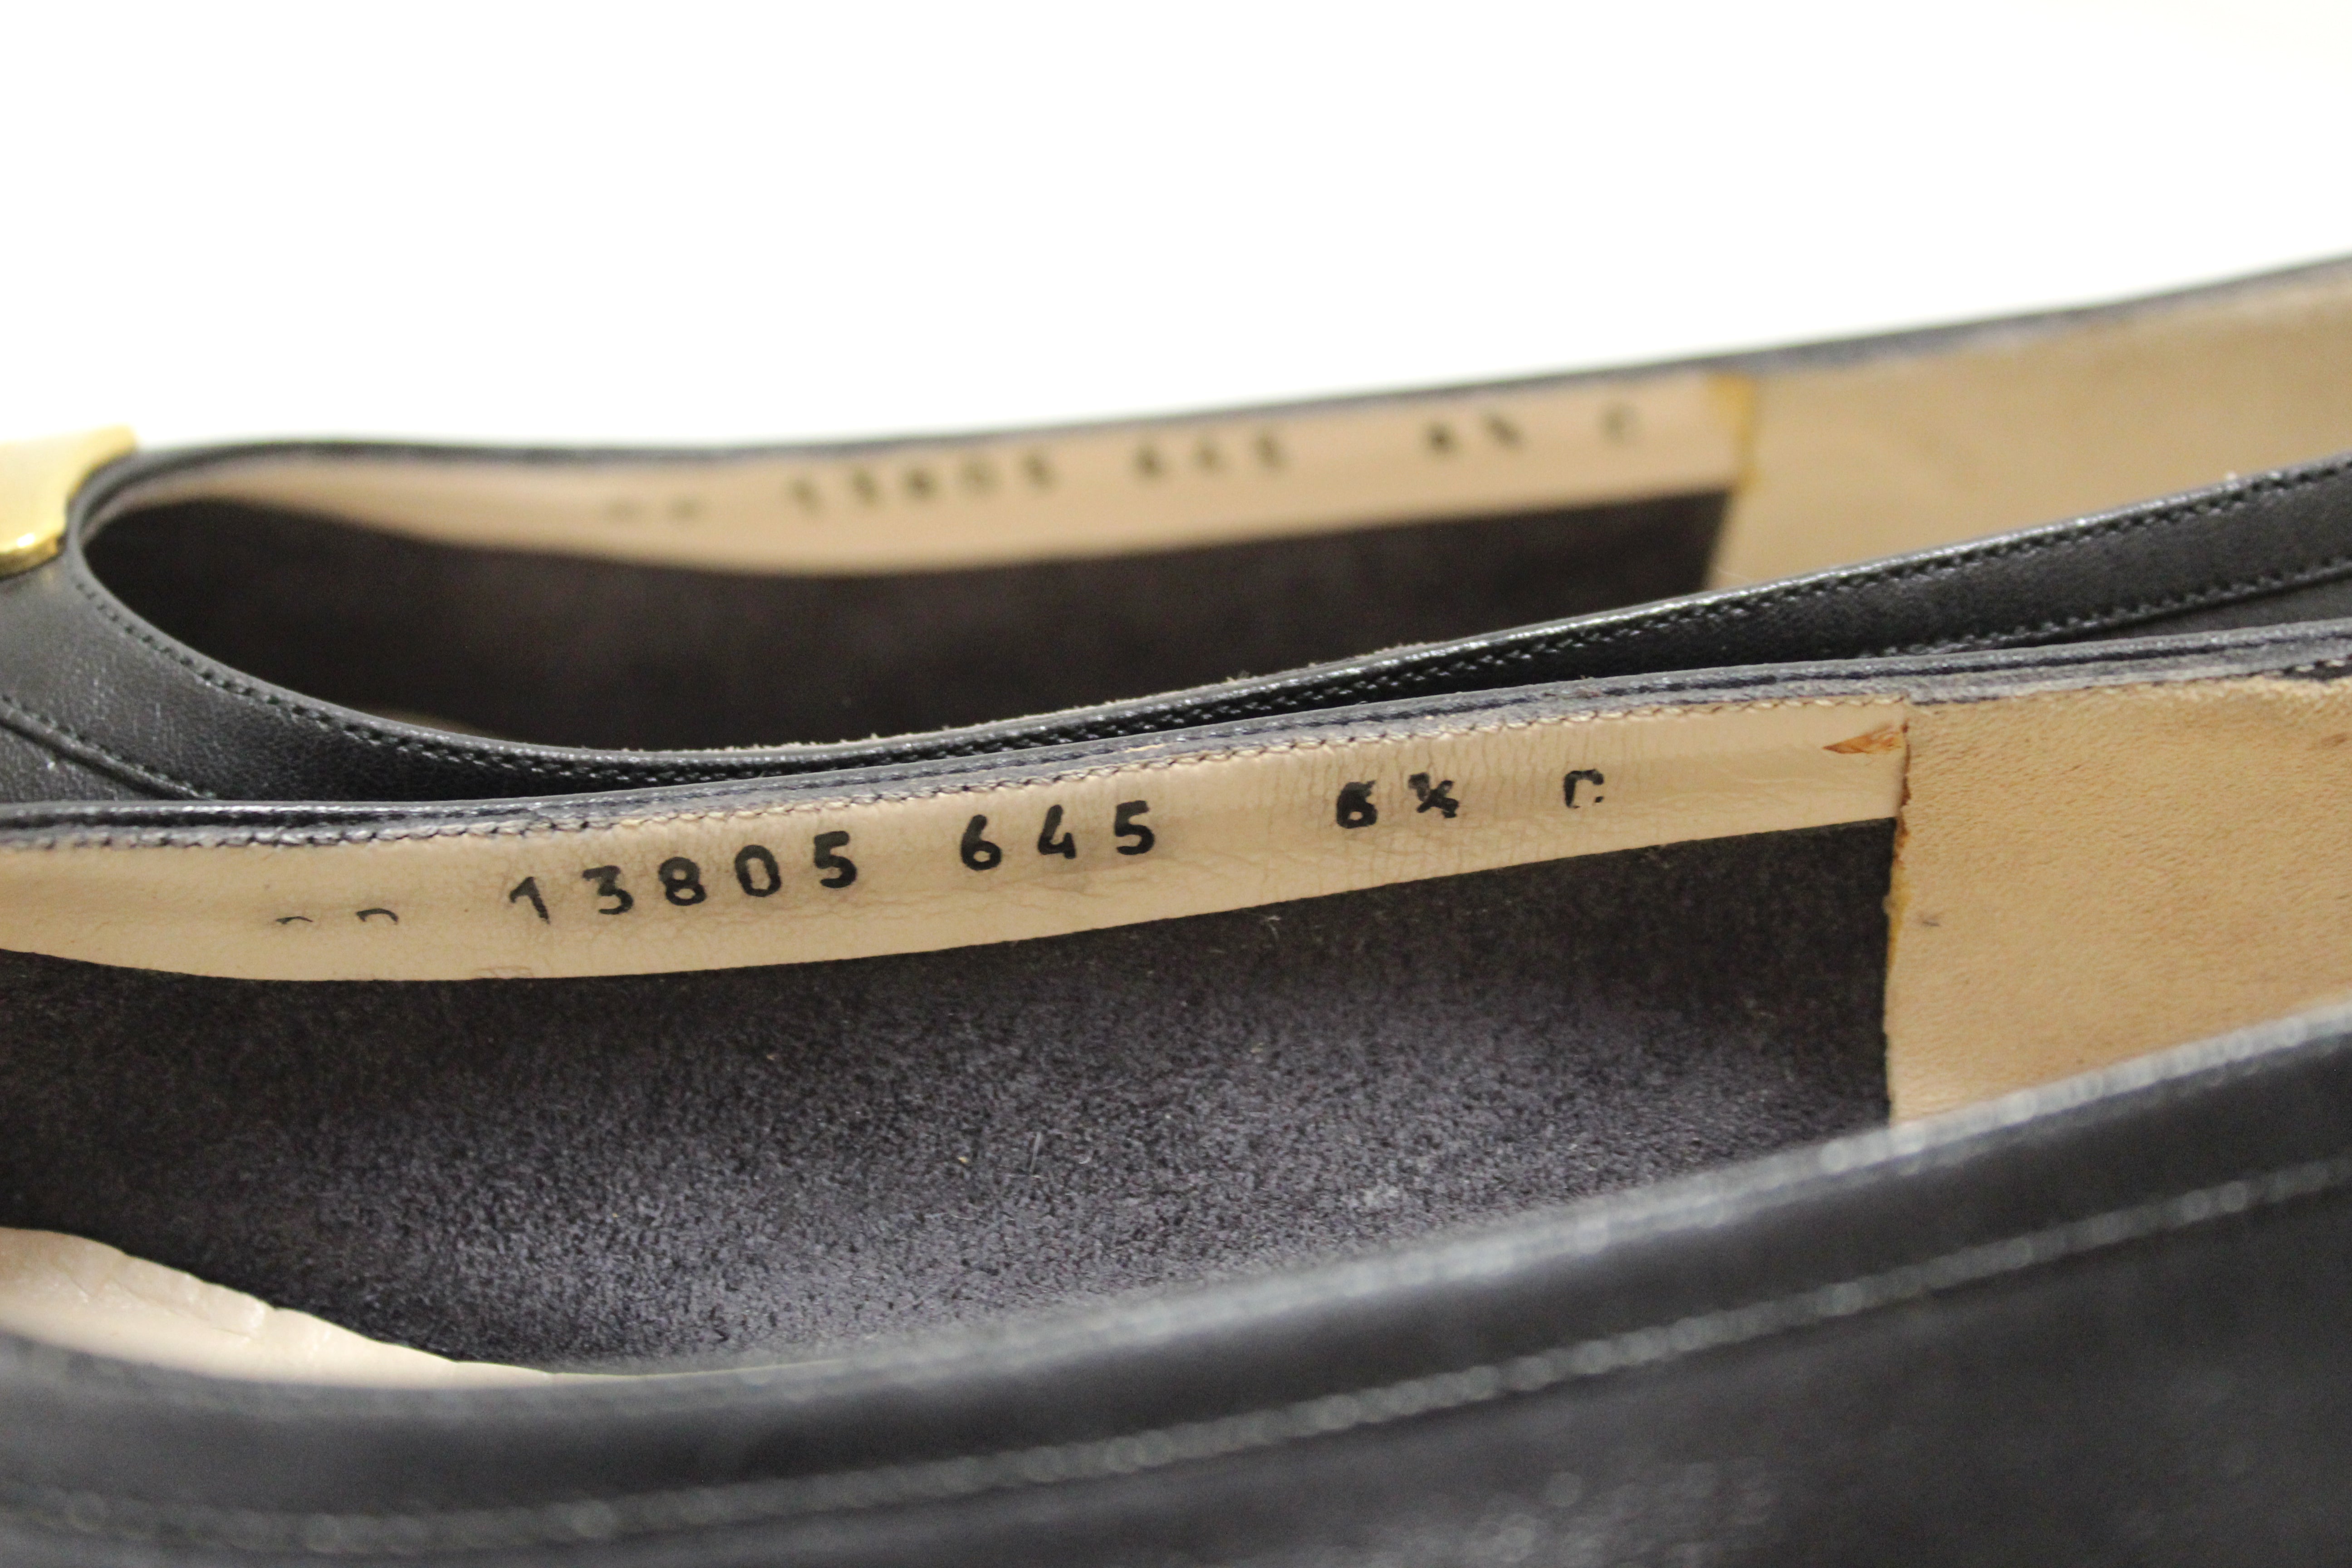 Authentic Salvatore Ferragamo Calfskin Black Leather Pumps Size 6.5C